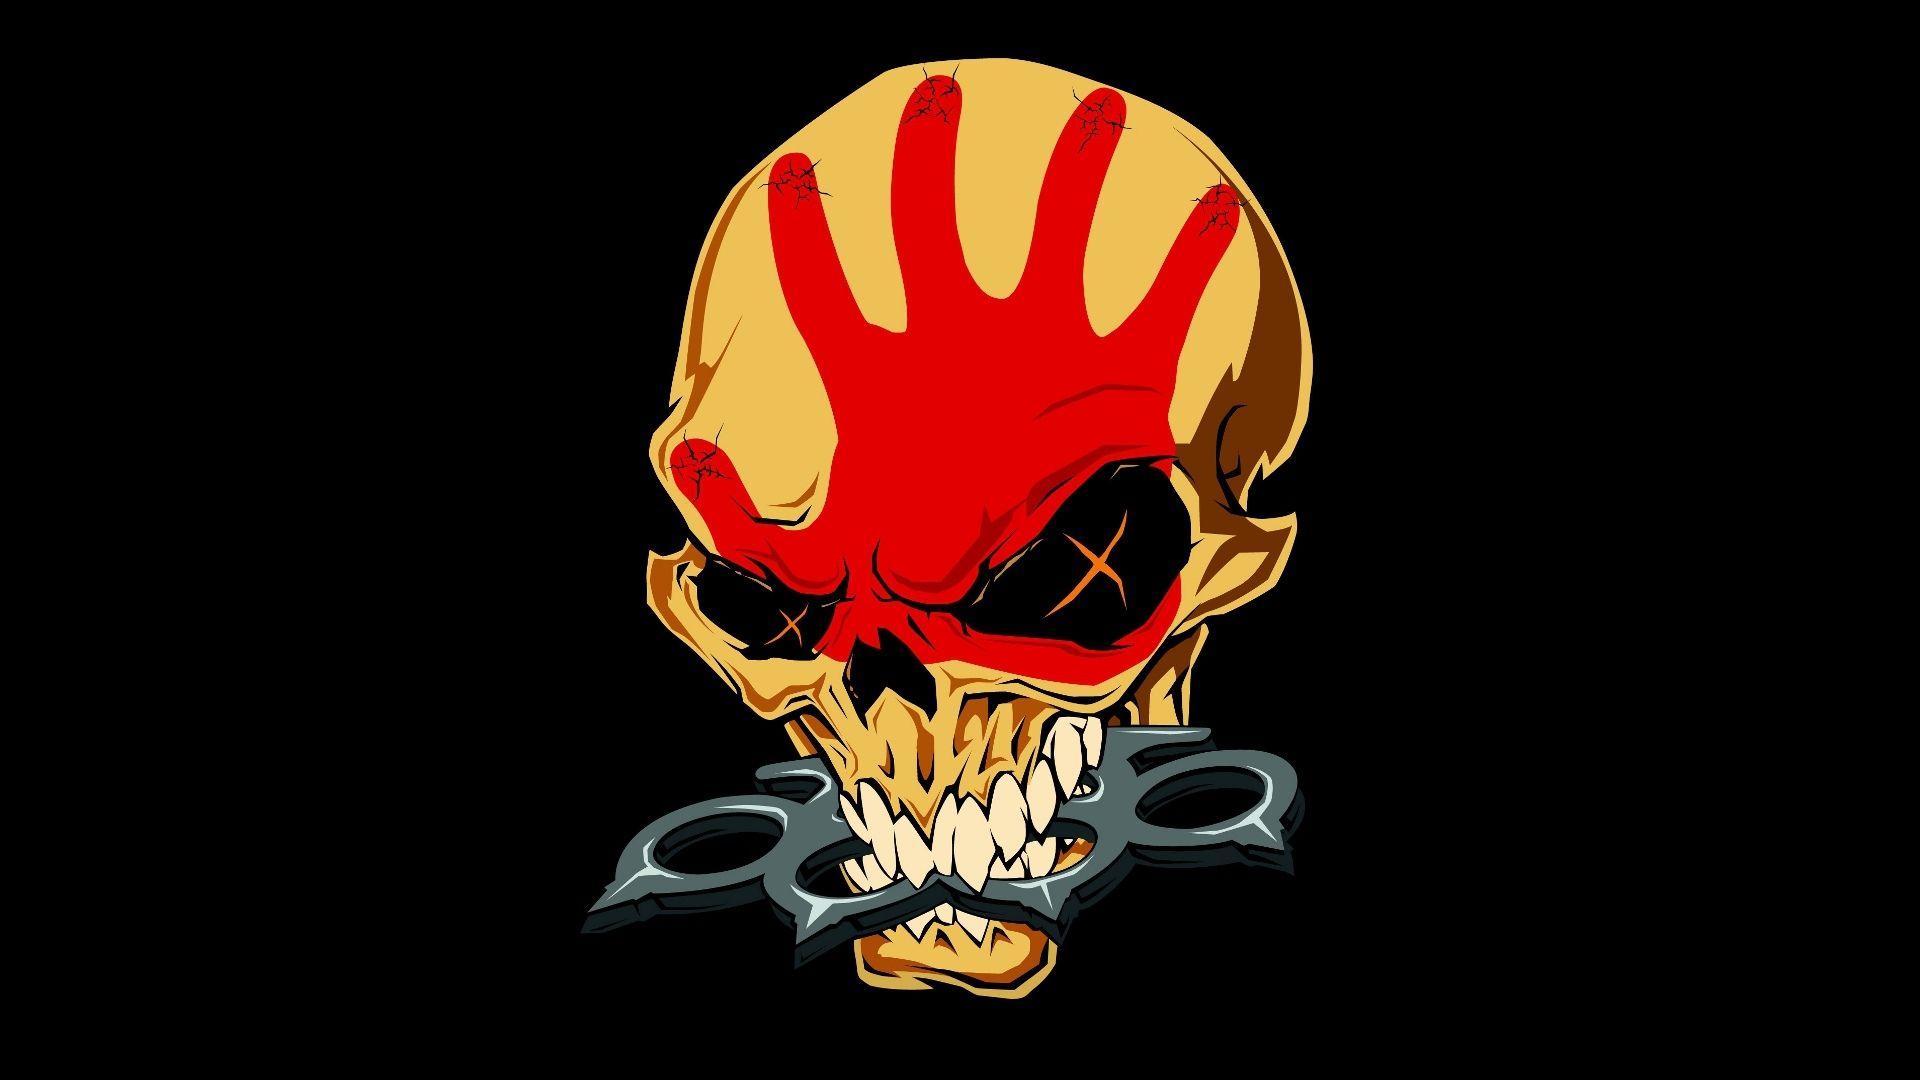 5FDP Logo - Five Finger Death Punch Wallpapers - Wallpaper Cave